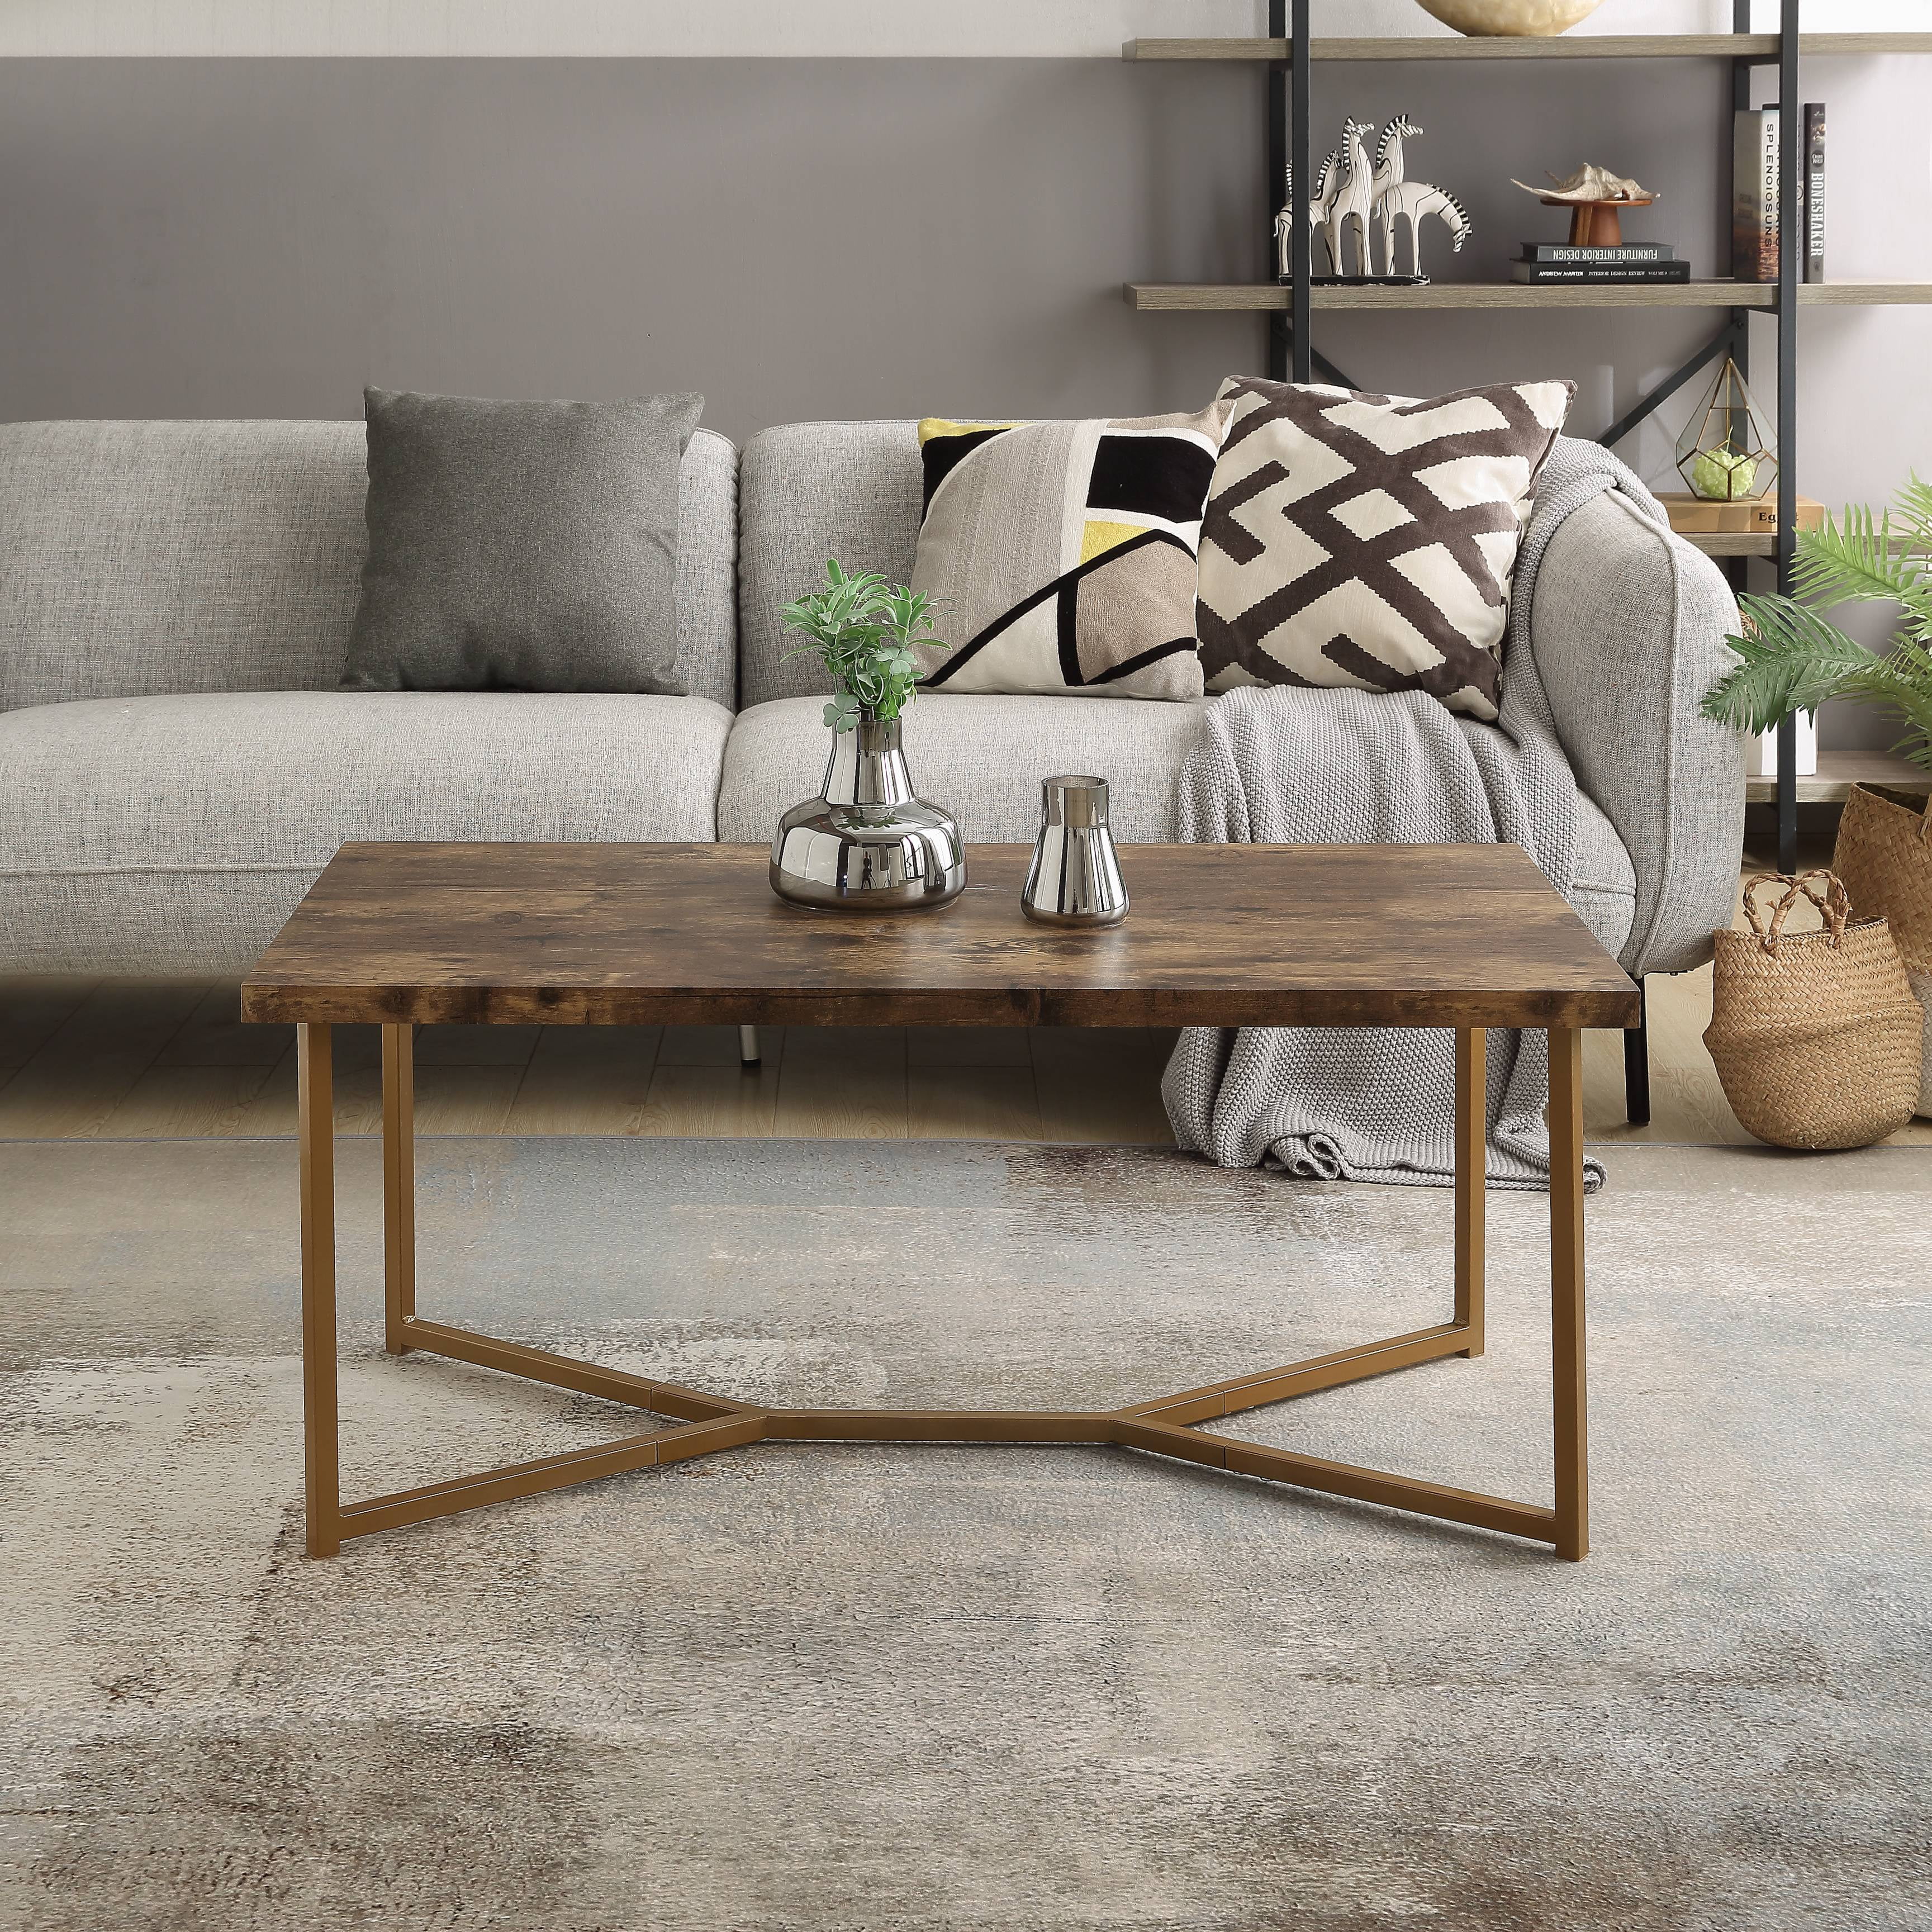 Rustic Coffee Table, Modern Wood Coffee Table for Living Room, Coffee